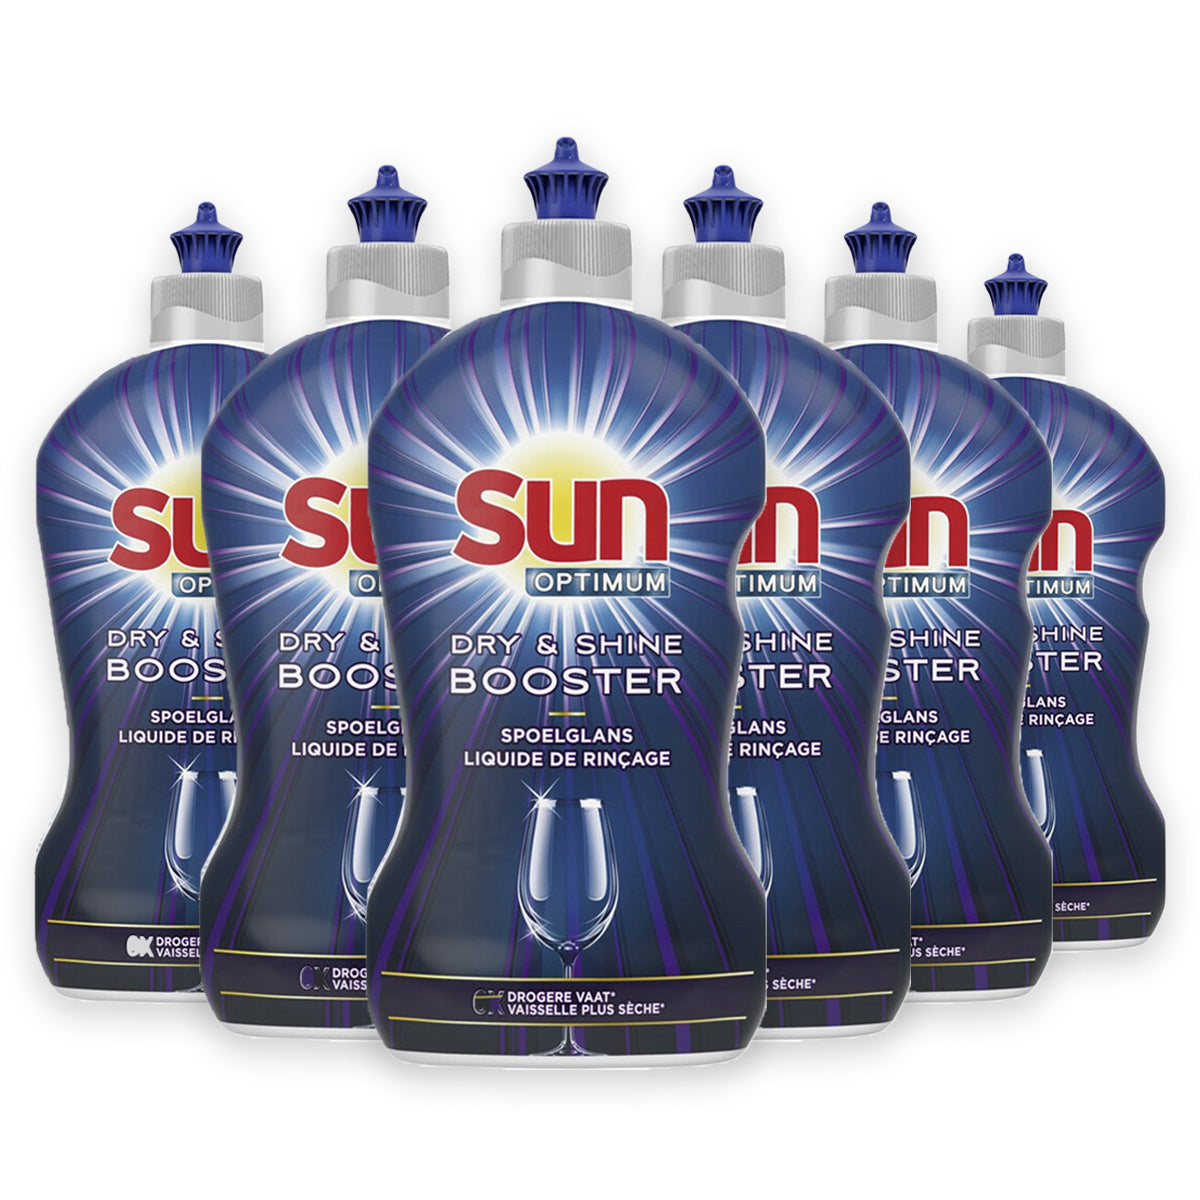 SUN Spoelglans - Dry & Shine Booster - 14 x 450 ml